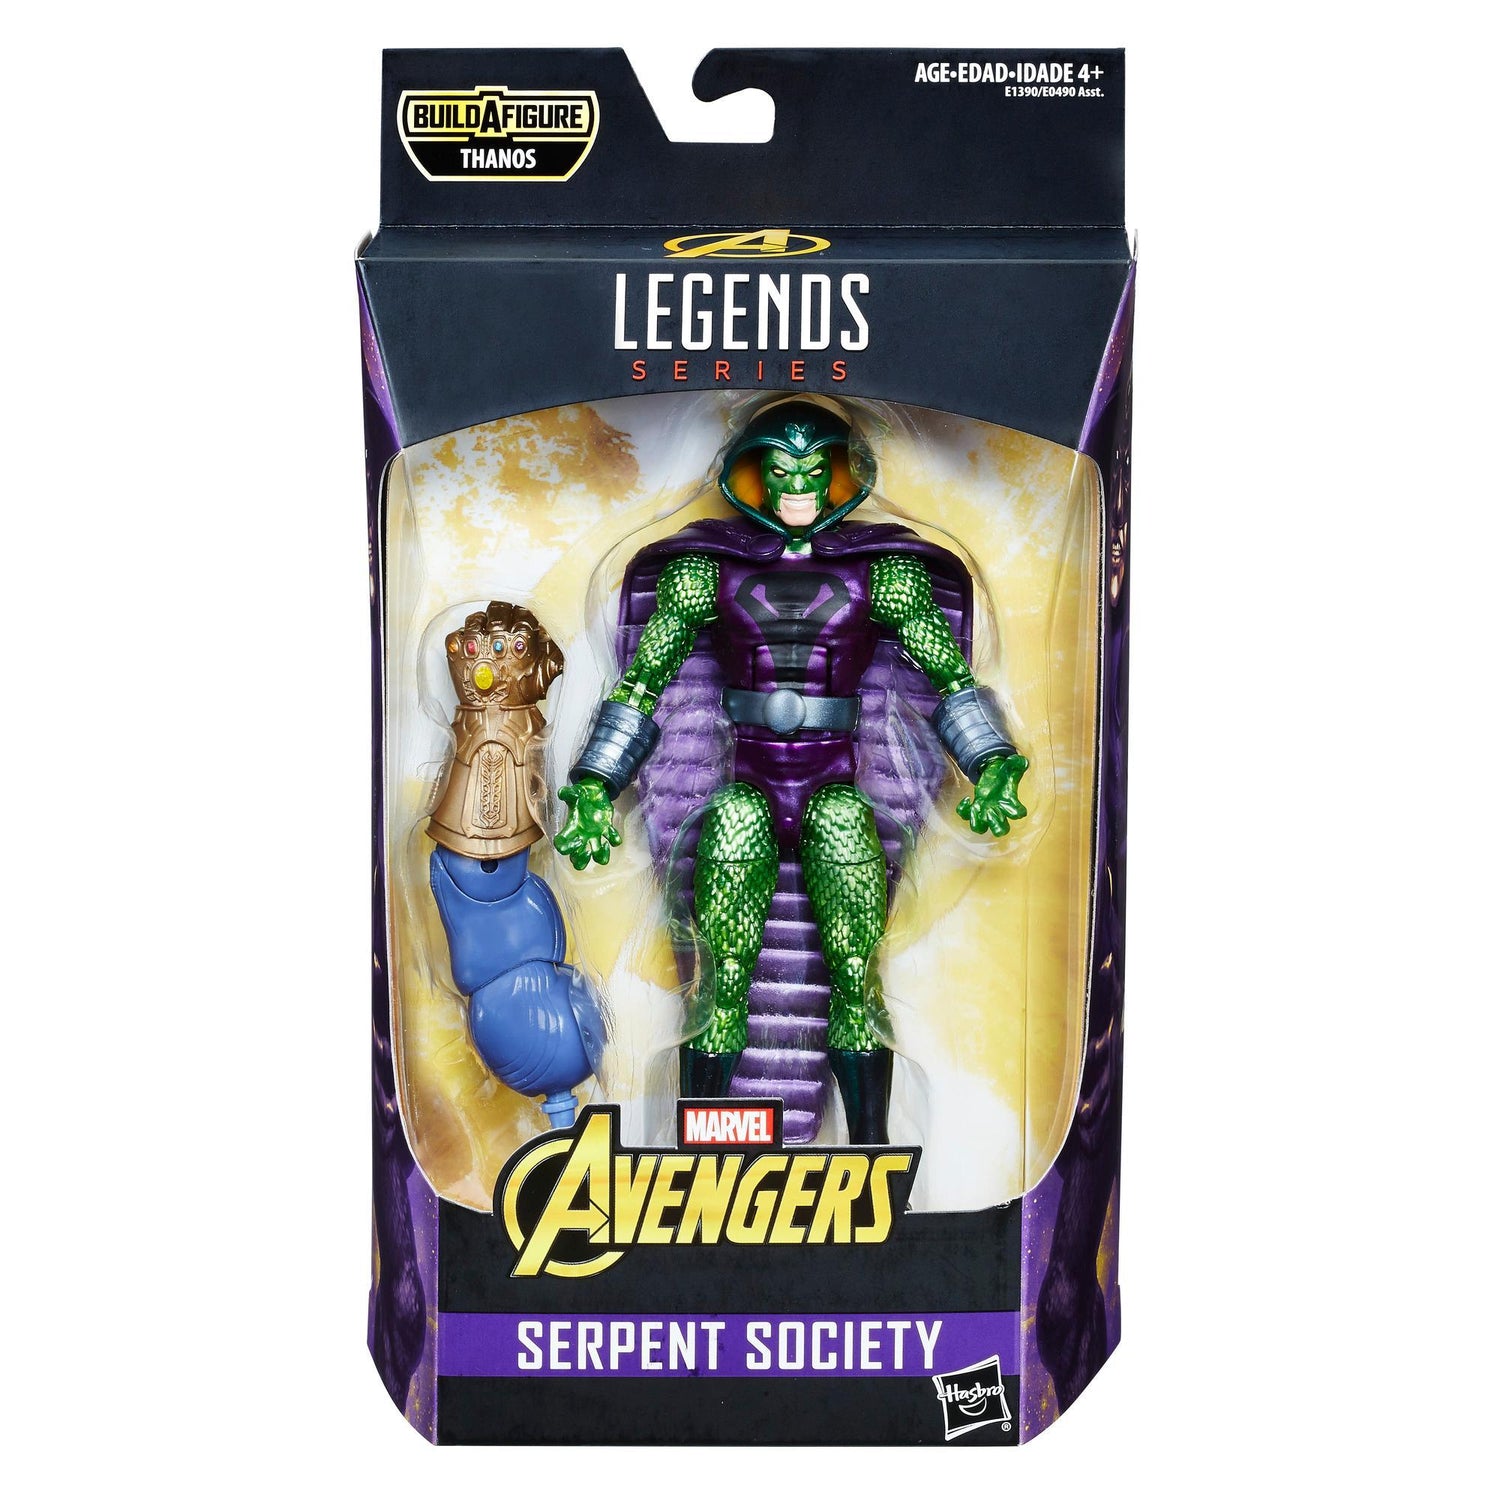 Avengers Marvel Legends Series Serpent Society Figure